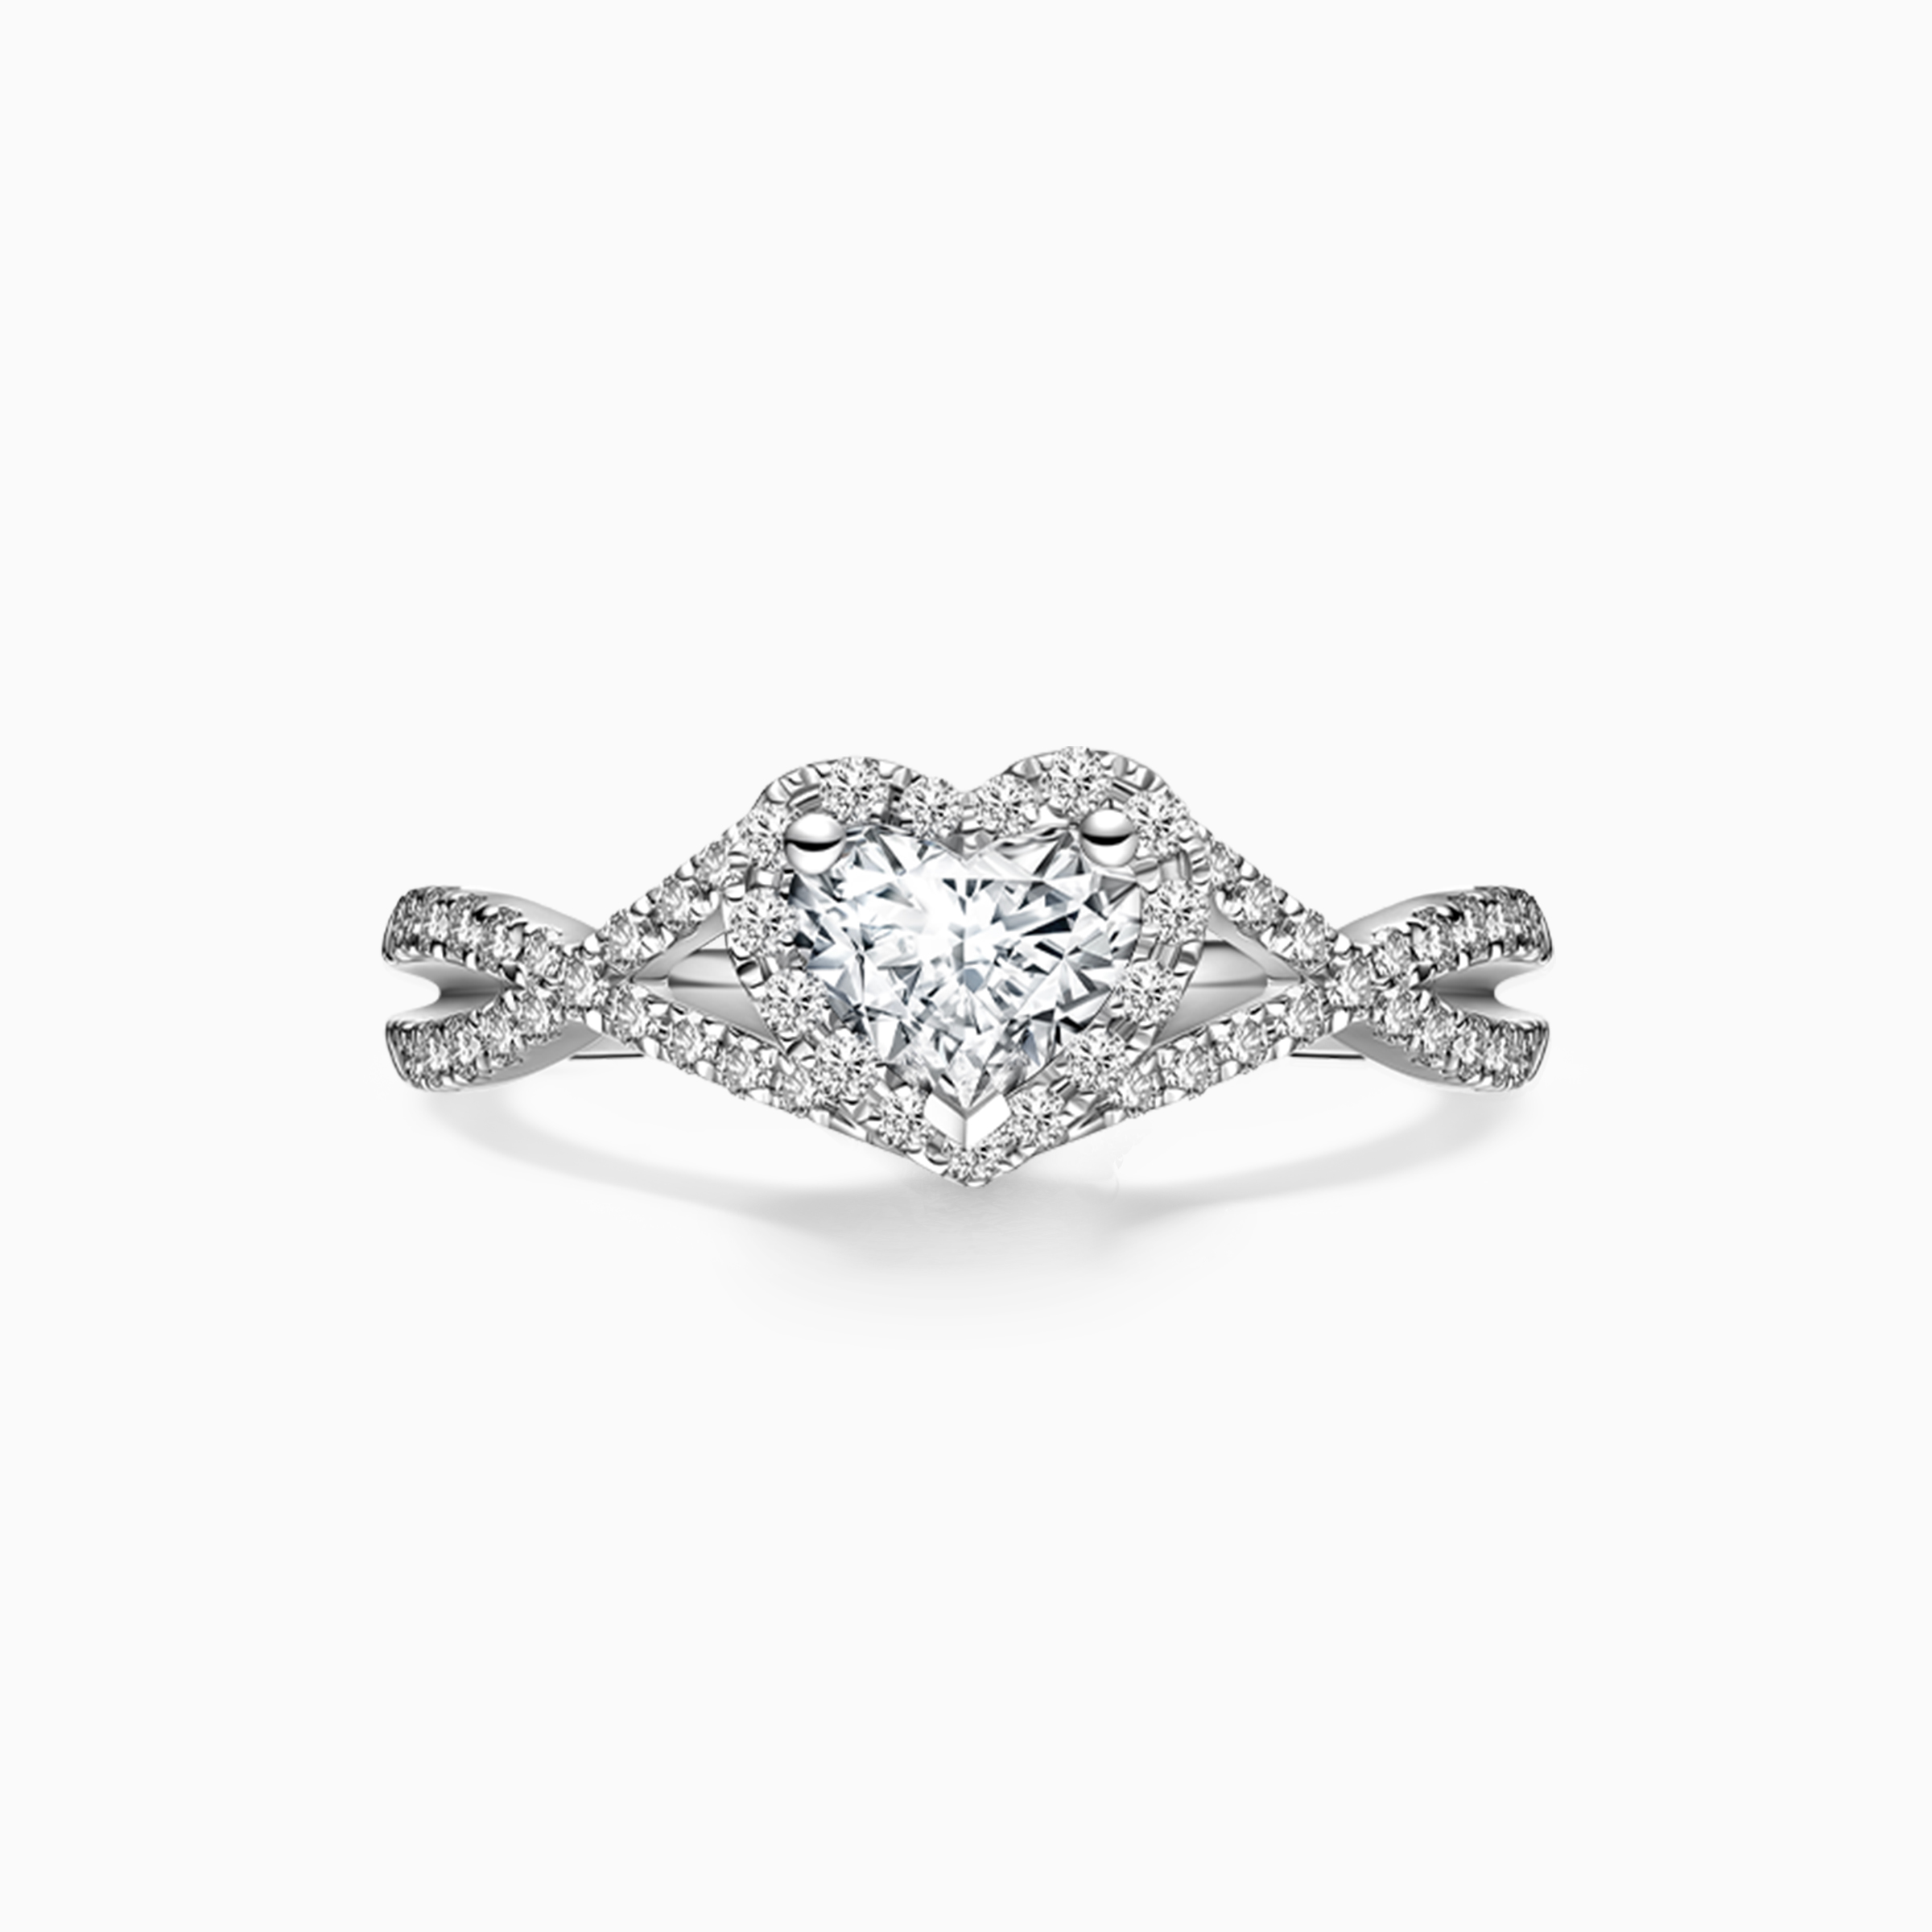 Darry Ring heart diamond promise ring